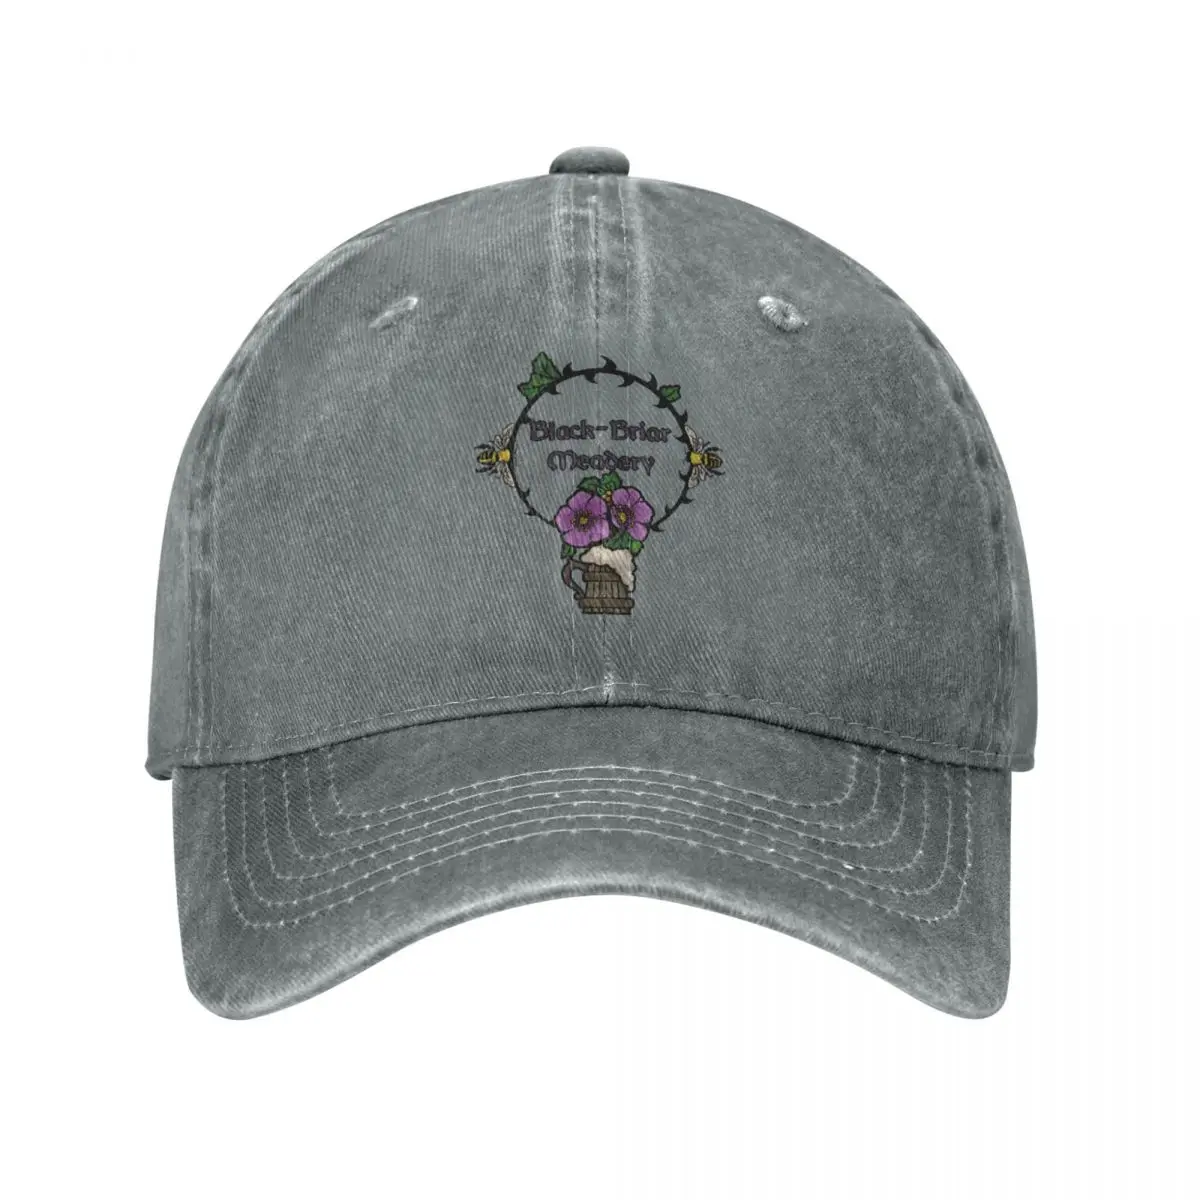 

Black-Briar Meadery Cap Cowboy Hat baseball new in military tactical cap kids Girl'ss Men's